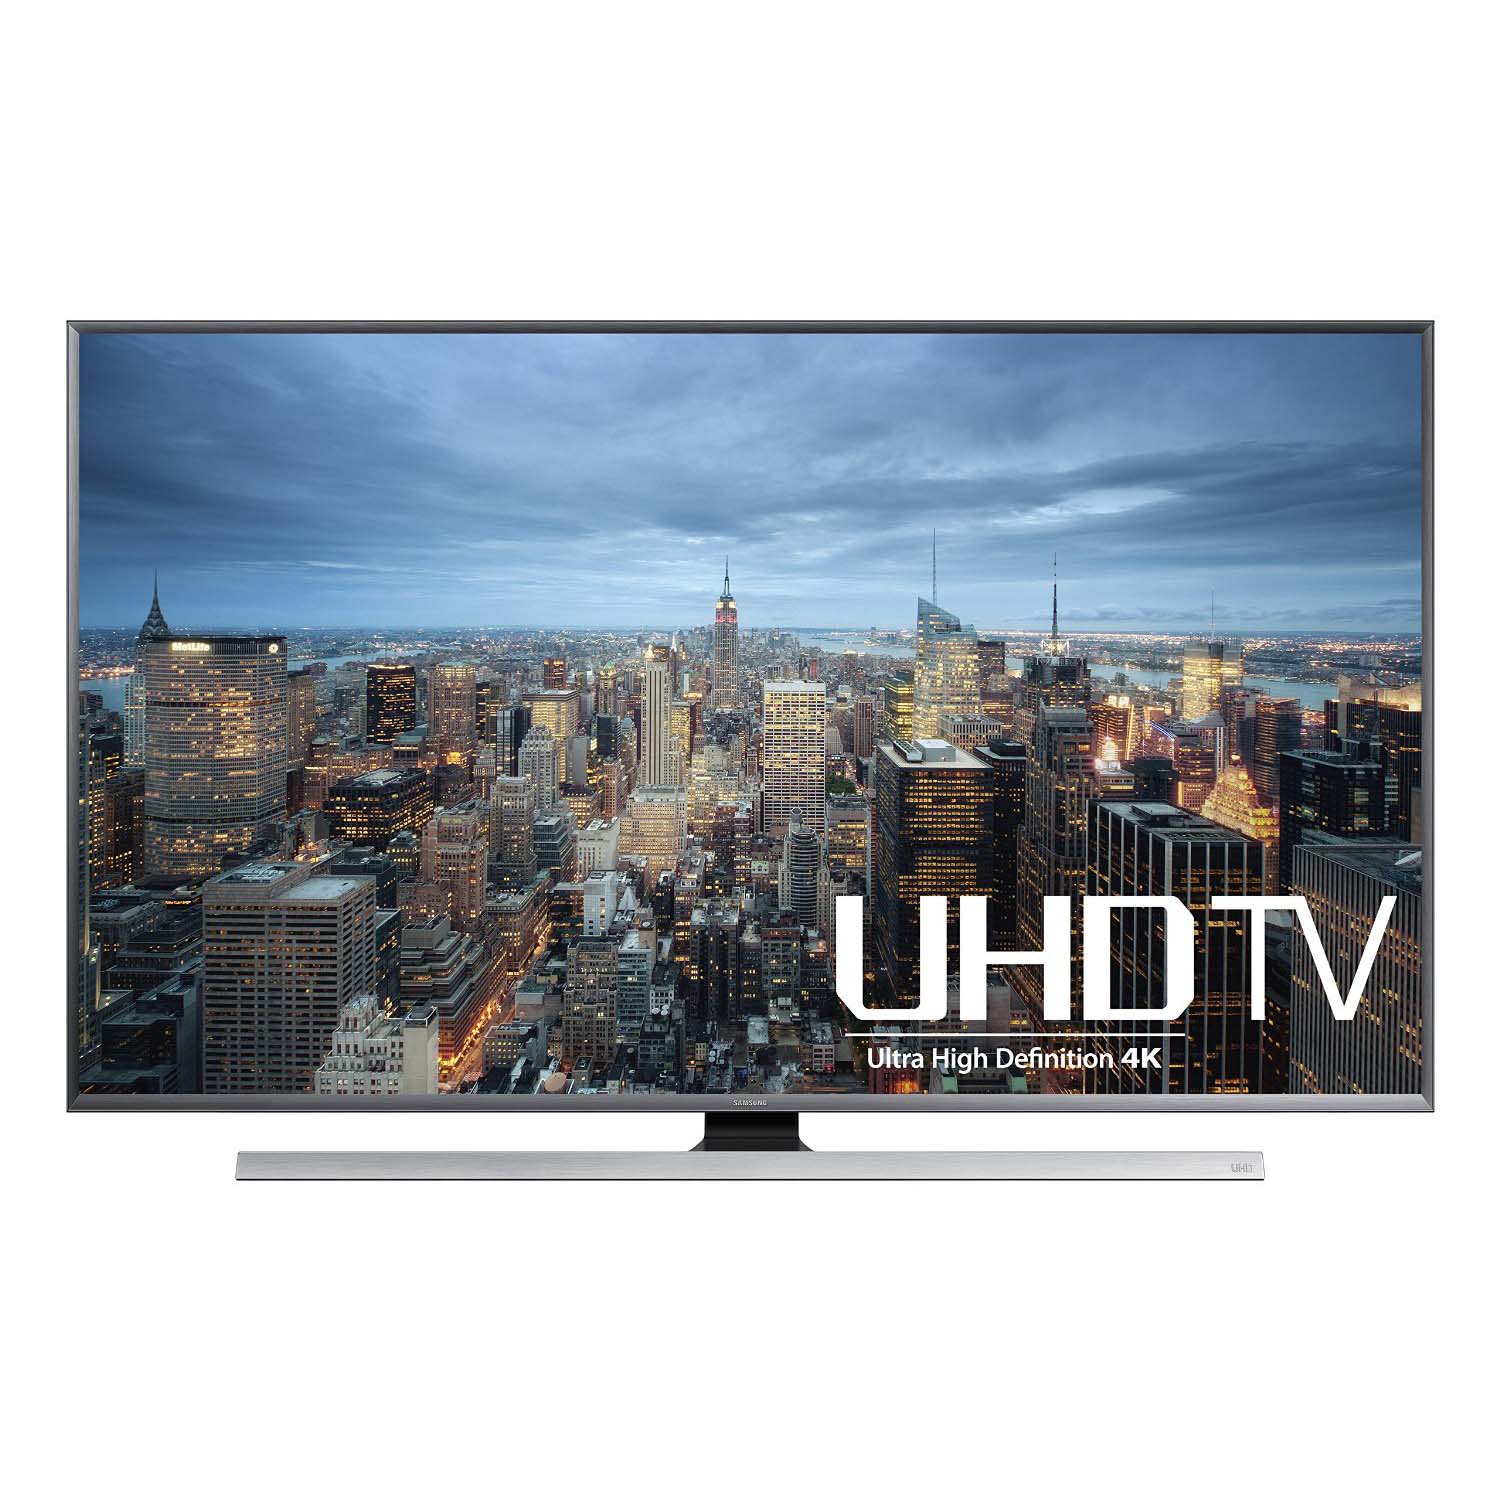 Samsung UN65JU7100 65-Inch 4K Ultra HD 3D Smart LED TV (2015 Model) *관부가세 별도*